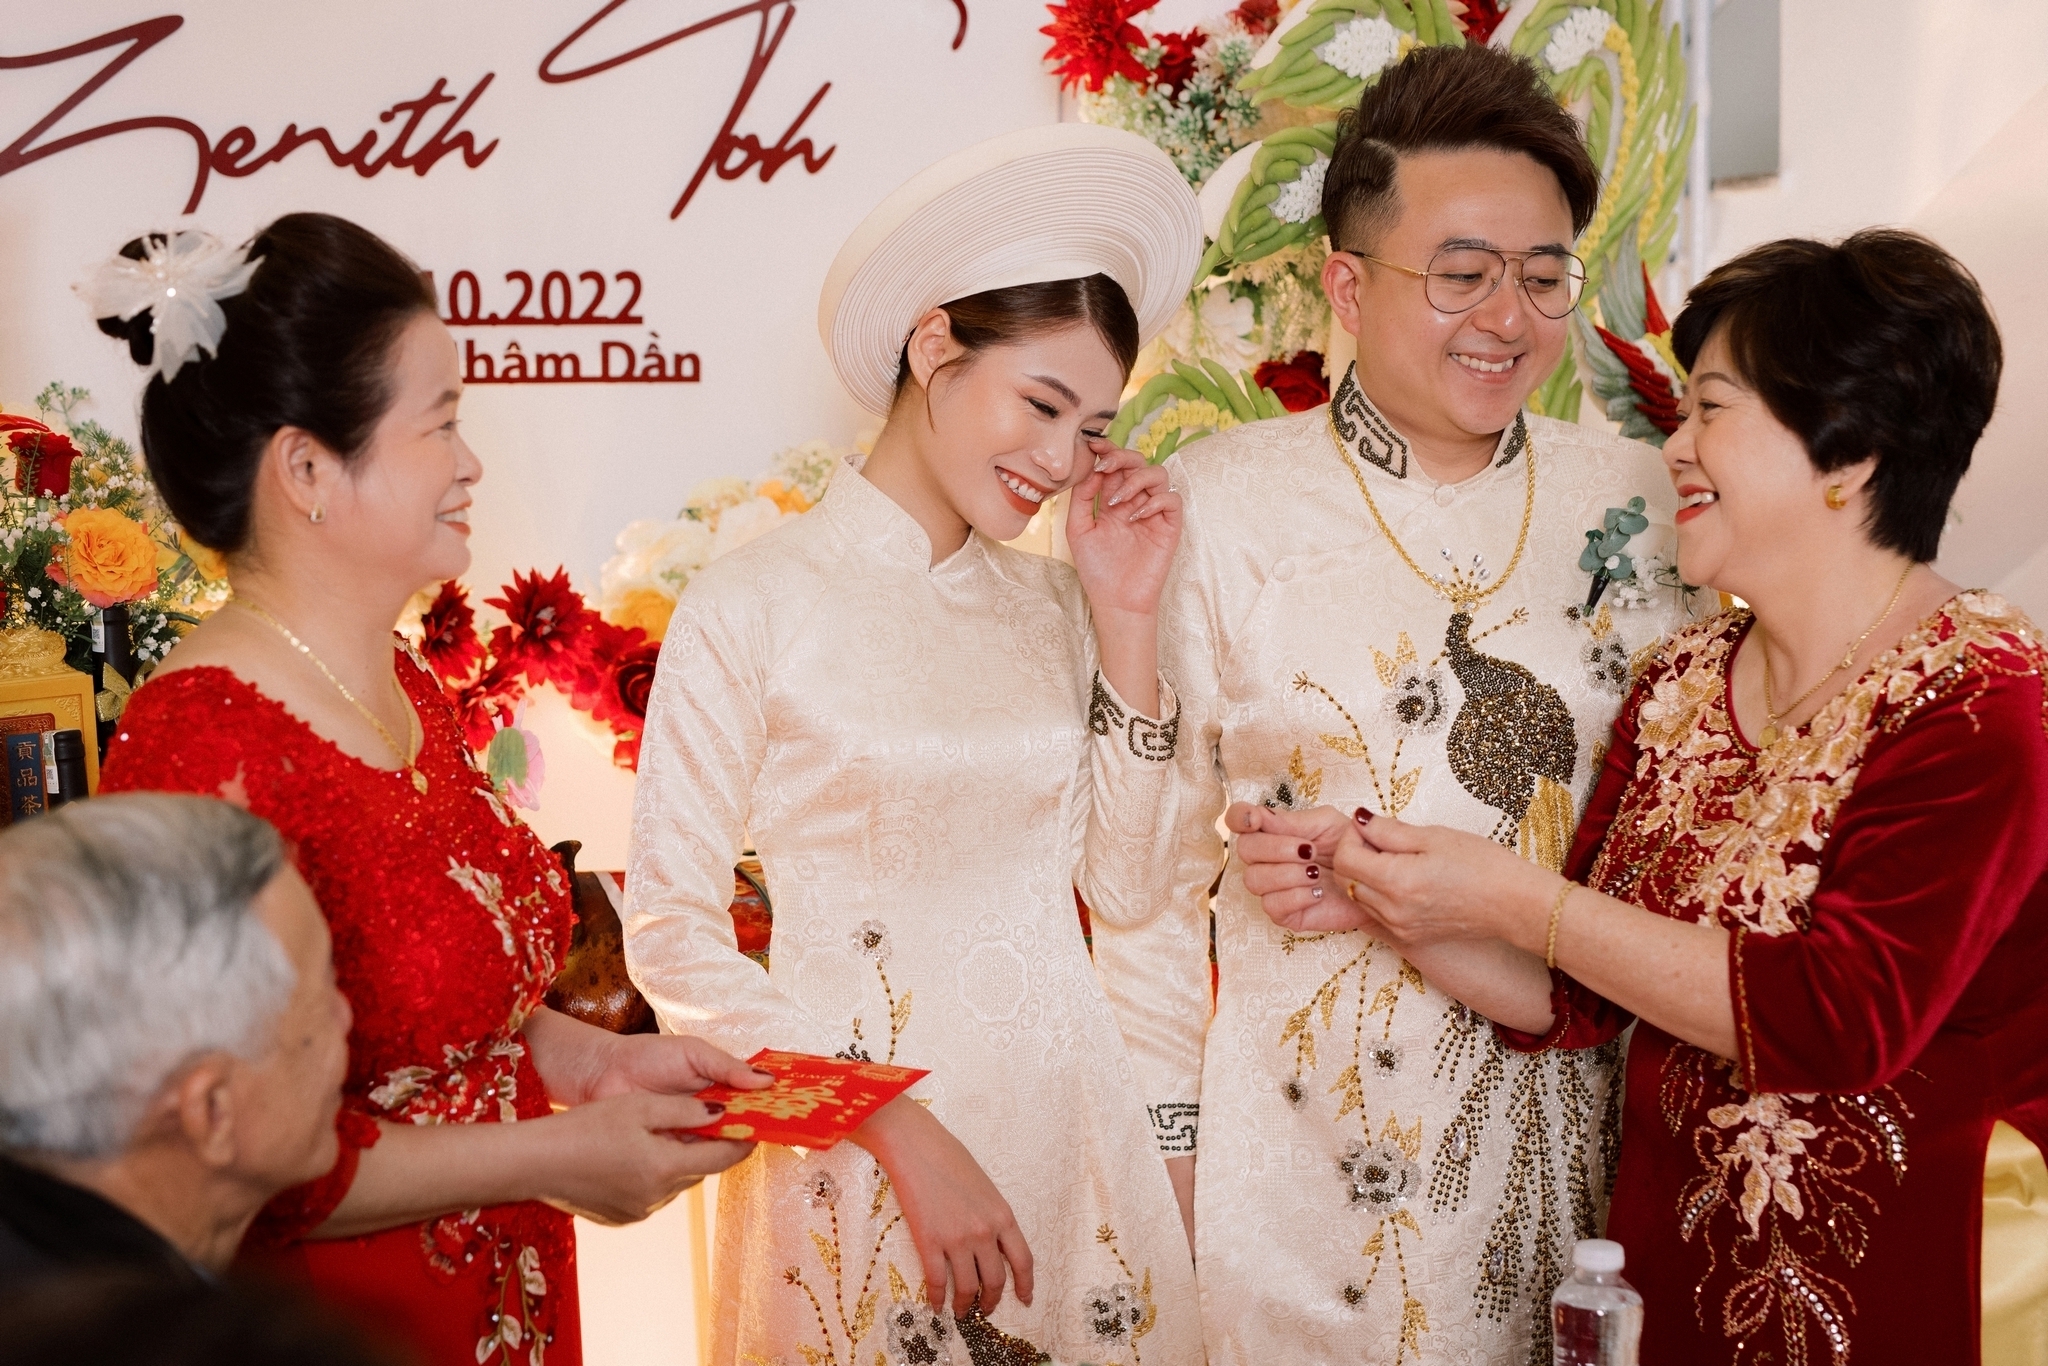 Da Nang Wedding Photographer and his artwork in wedding ceremony album